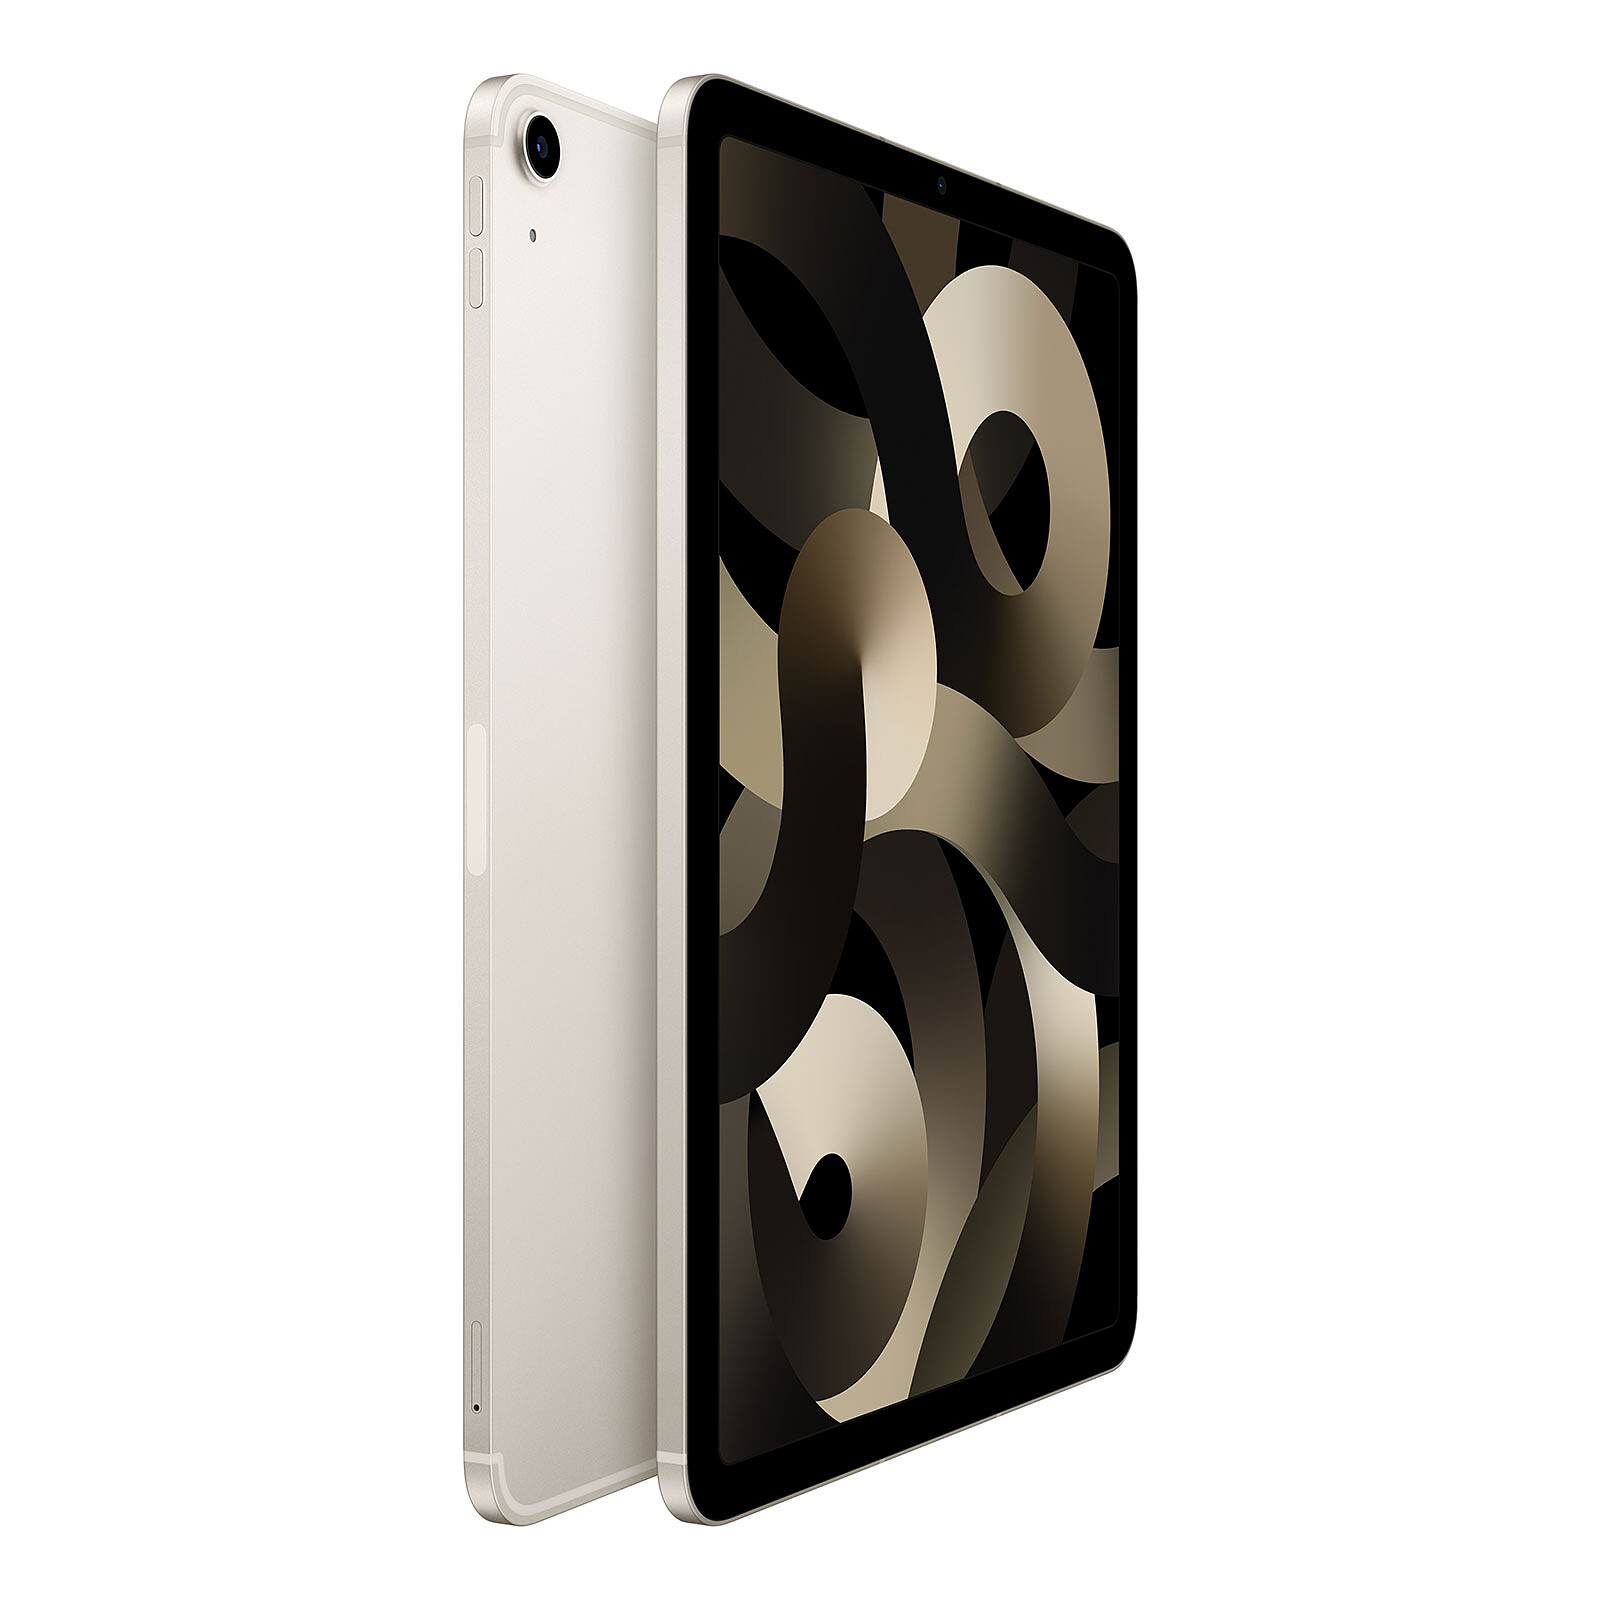 Recensione: pellicola antiriflesso Cable Technologies per iPad mini 